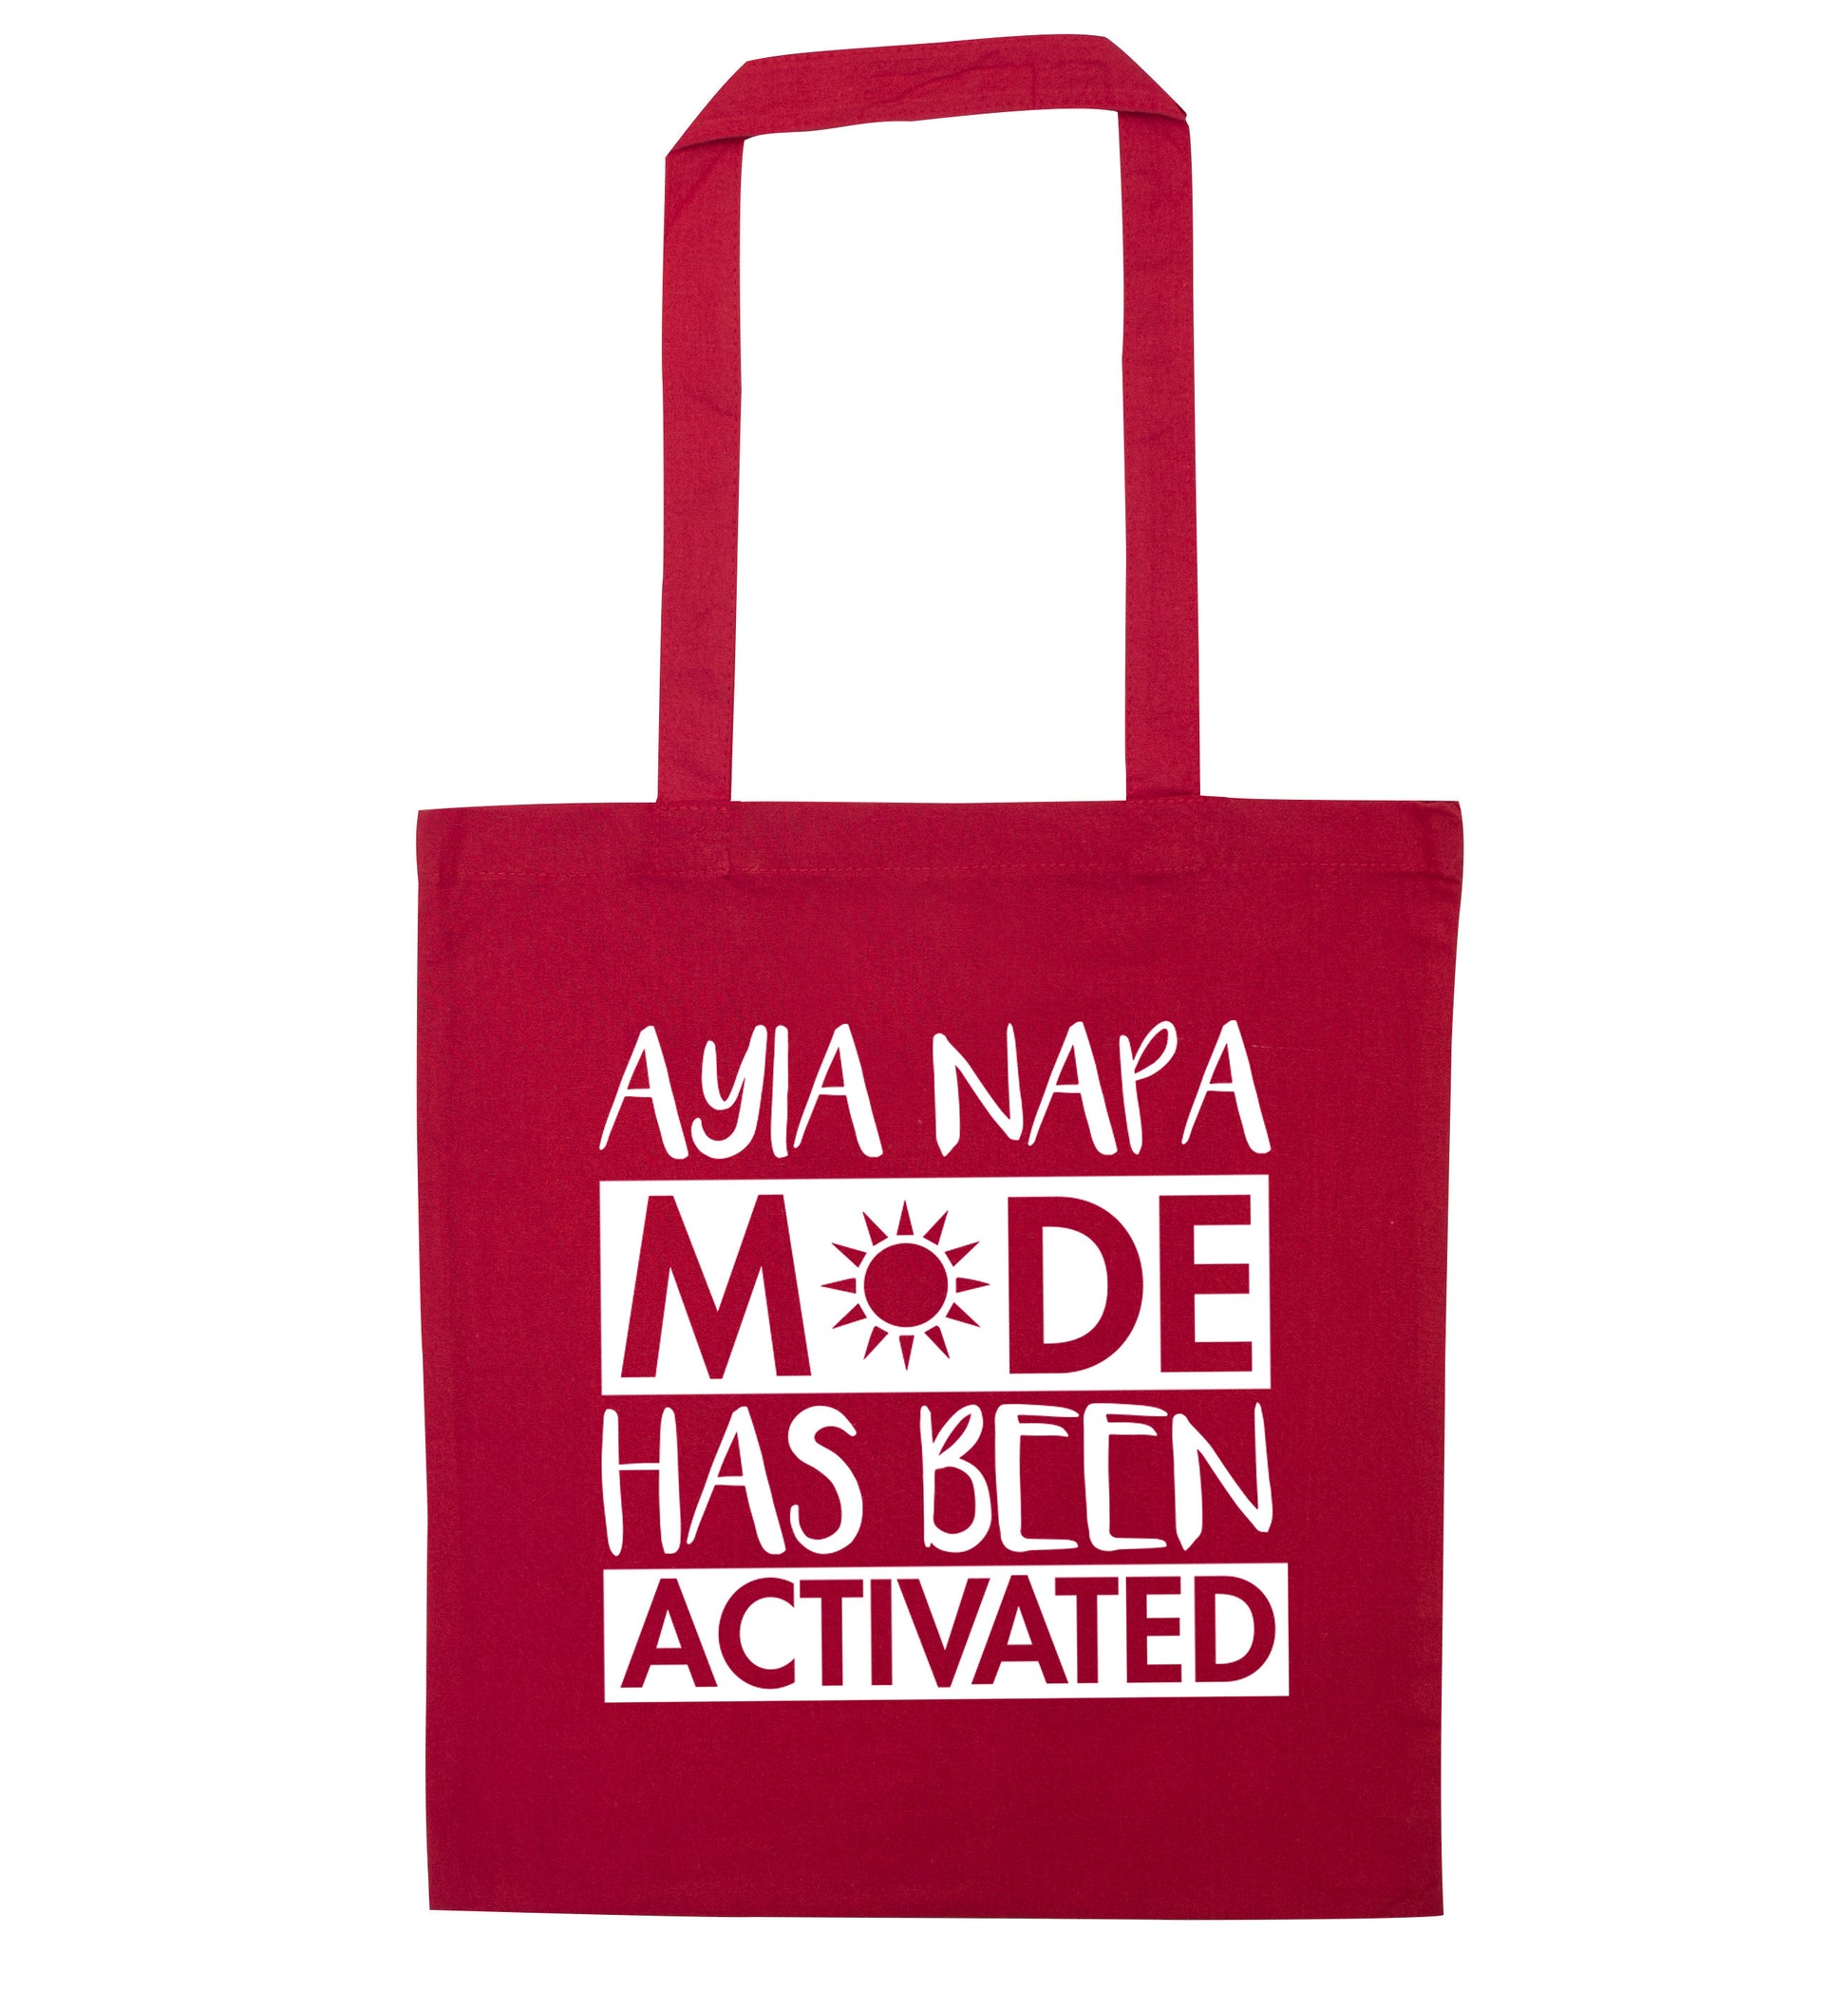 Aiya Napa mode has been activated red tote bag